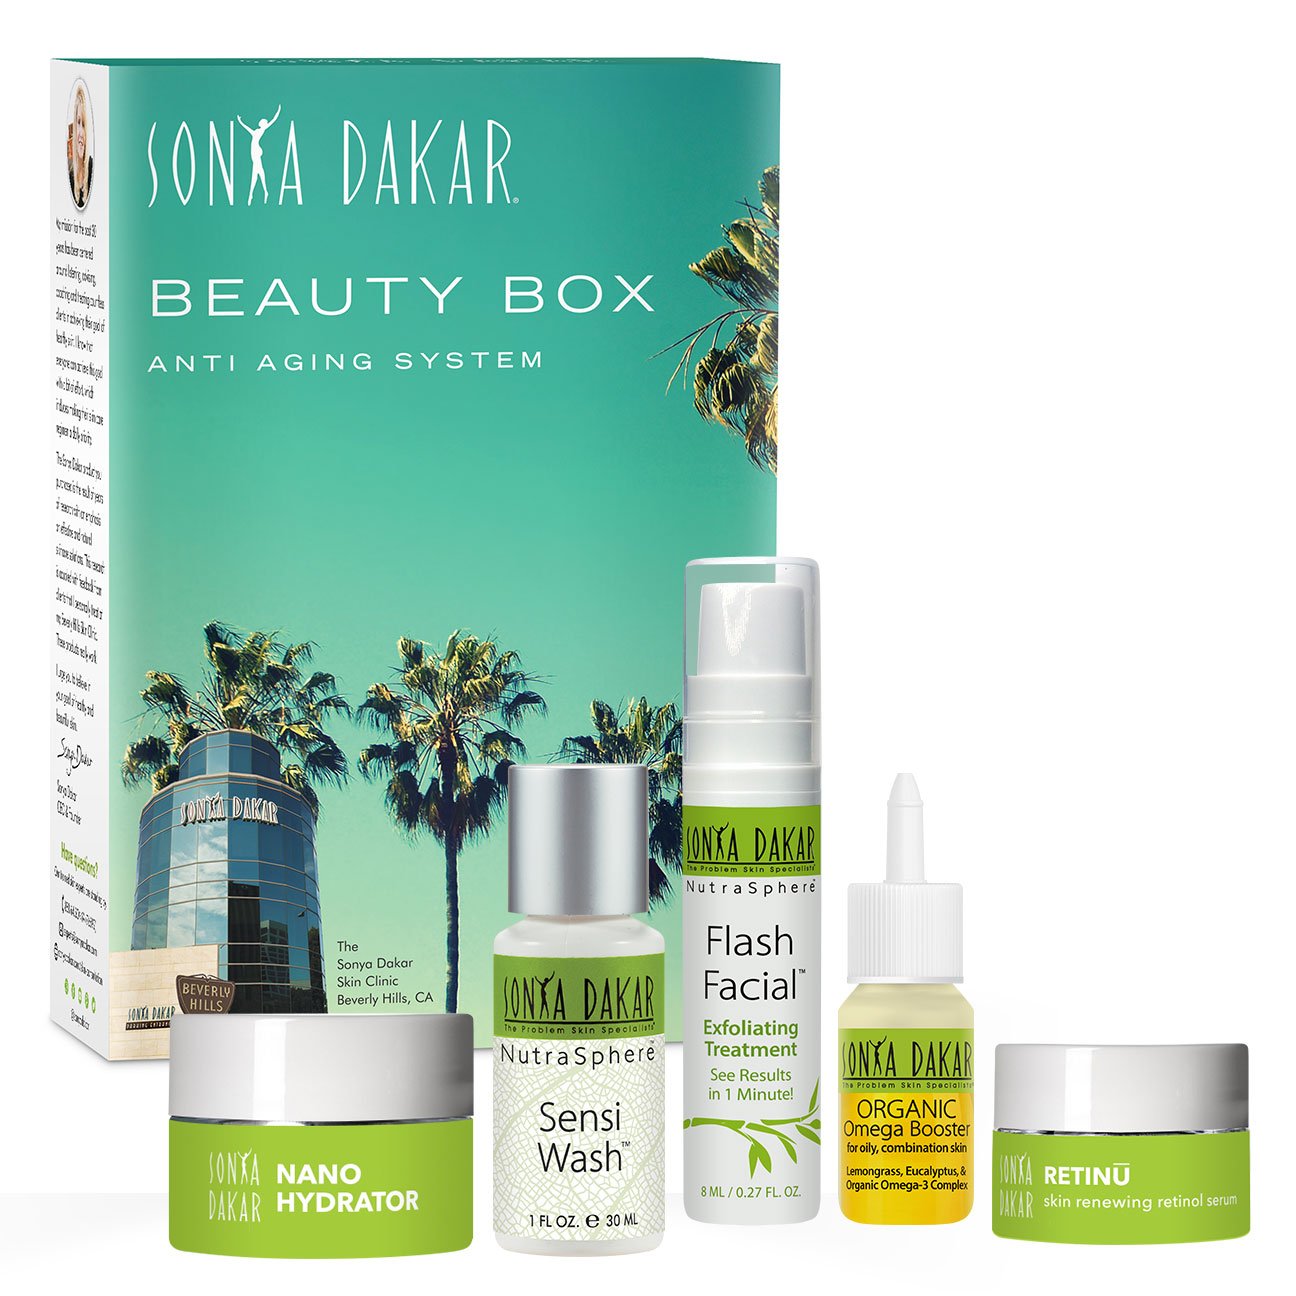 Sonya Dakar Anti-Aging Beauty Box